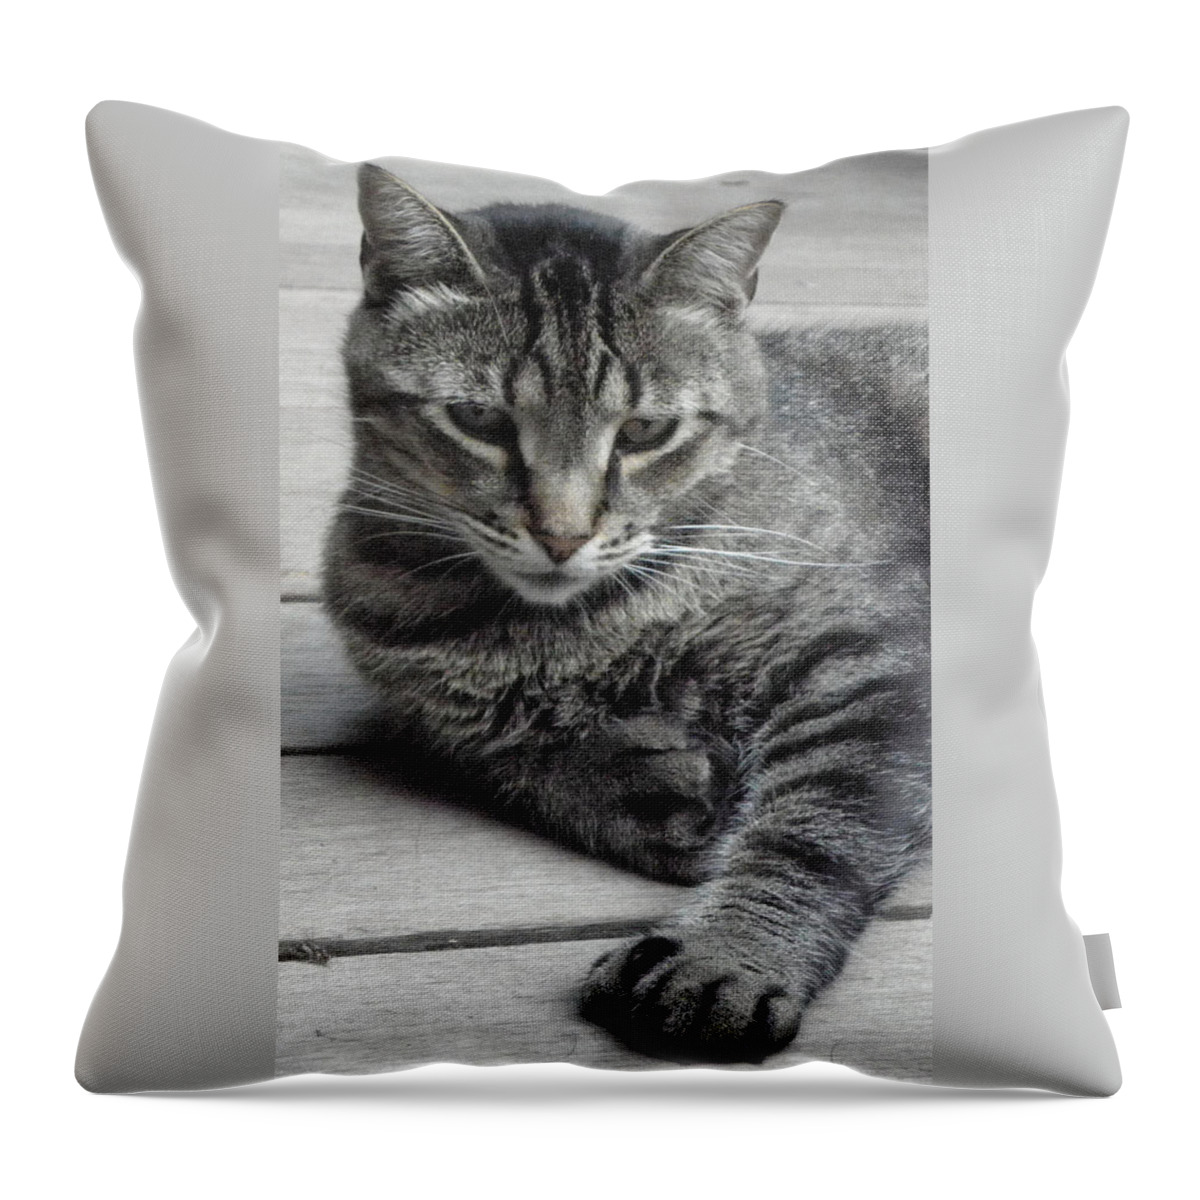 Cat Throw Pillow featuring the photograph Cisco And His Big Feet by Kim Galluzzo Wozniak